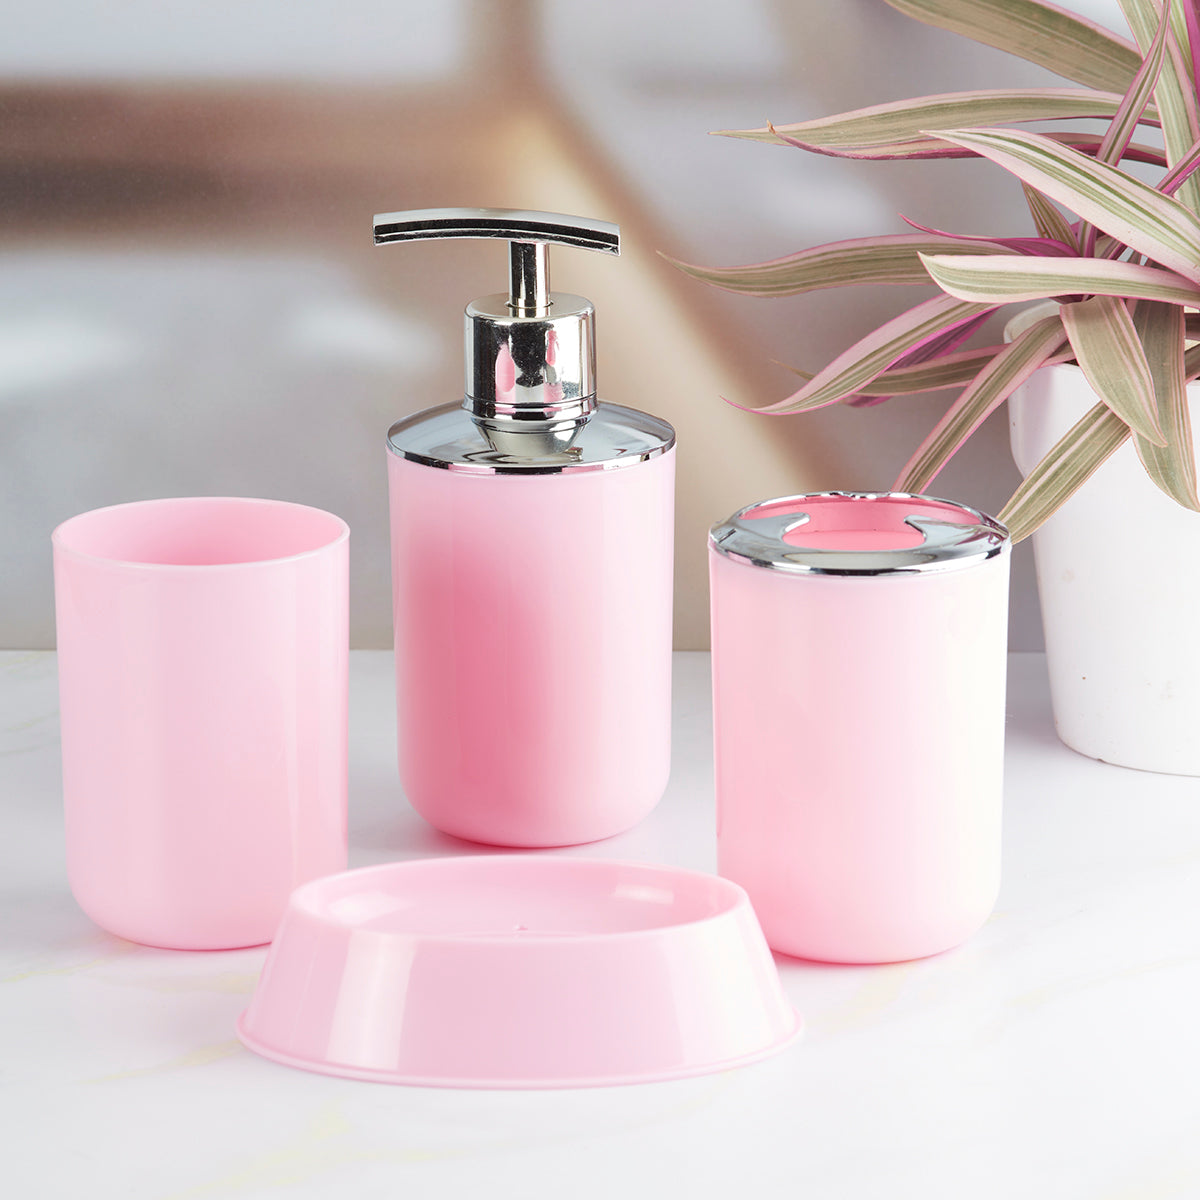 Acrylic Bathroom Accessories Set of 4 Bath Set with Soap Dispenser (7395)